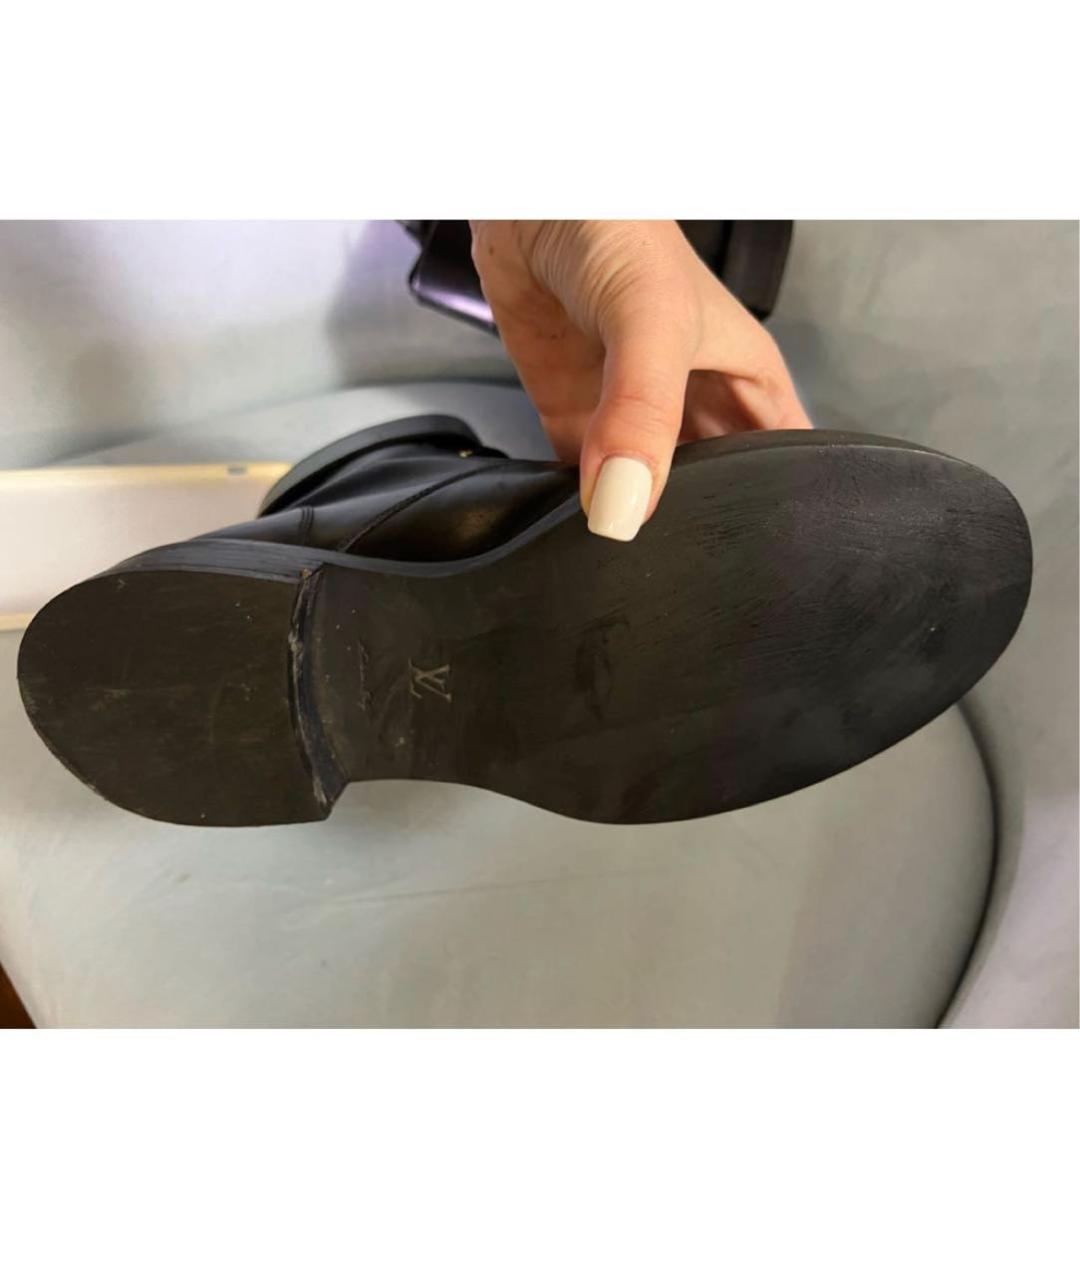 LOUIS VUITTON PRE-OWNED Черные кожаные ботинки, фото 7